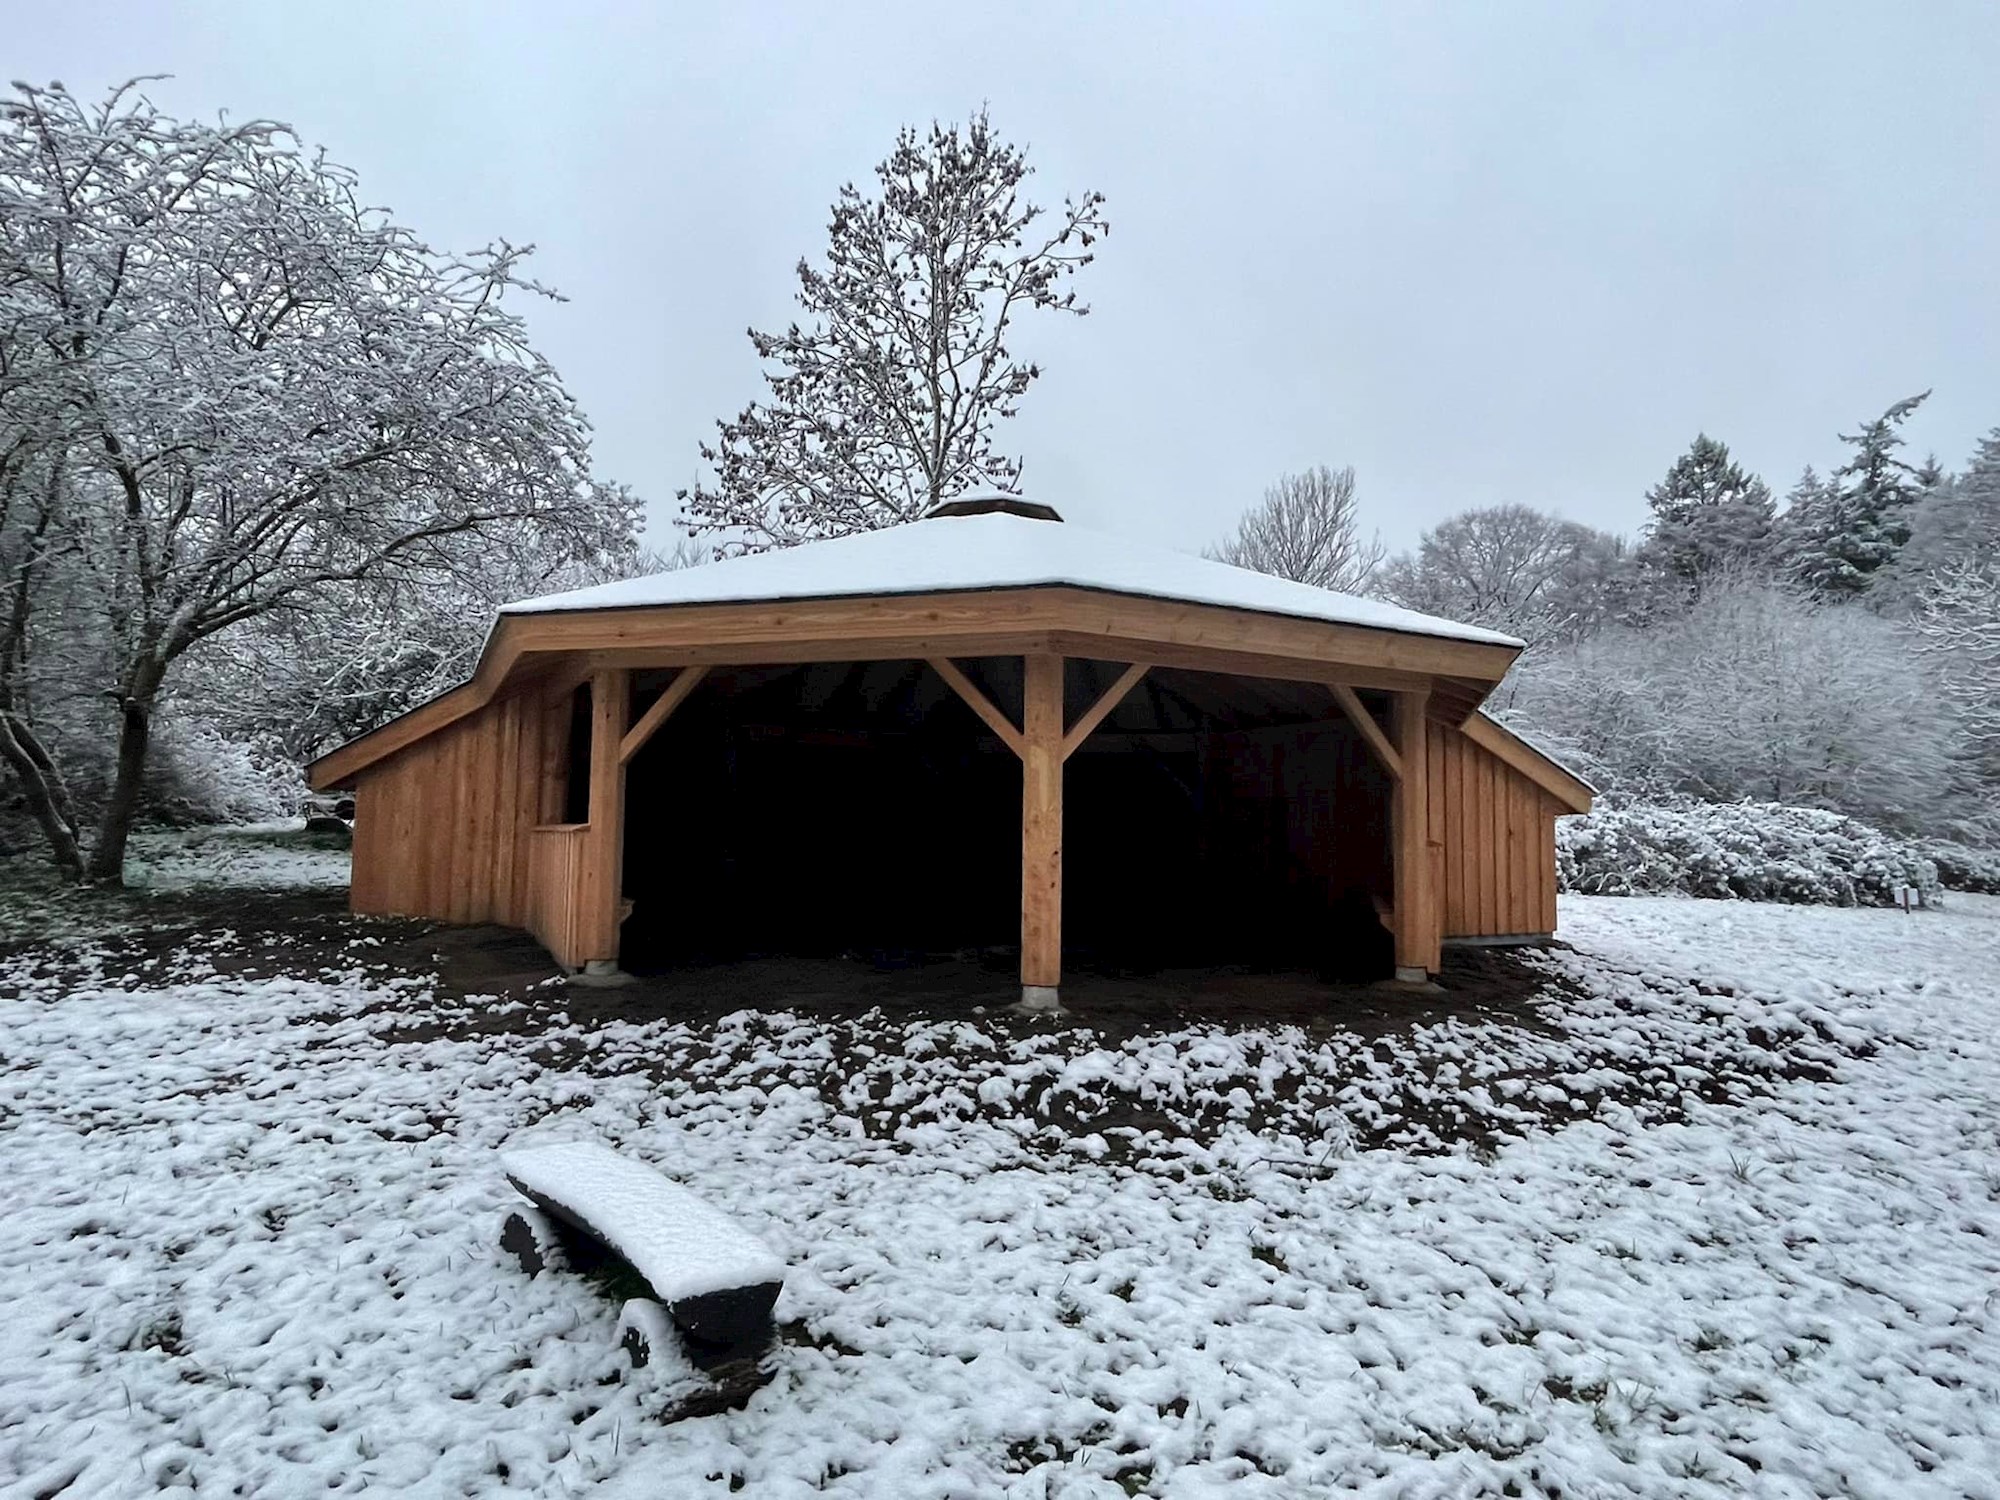 Den nyopførte bålhytte dækket i sne den 24. december 2021. Foto: Joan Jakobsen.